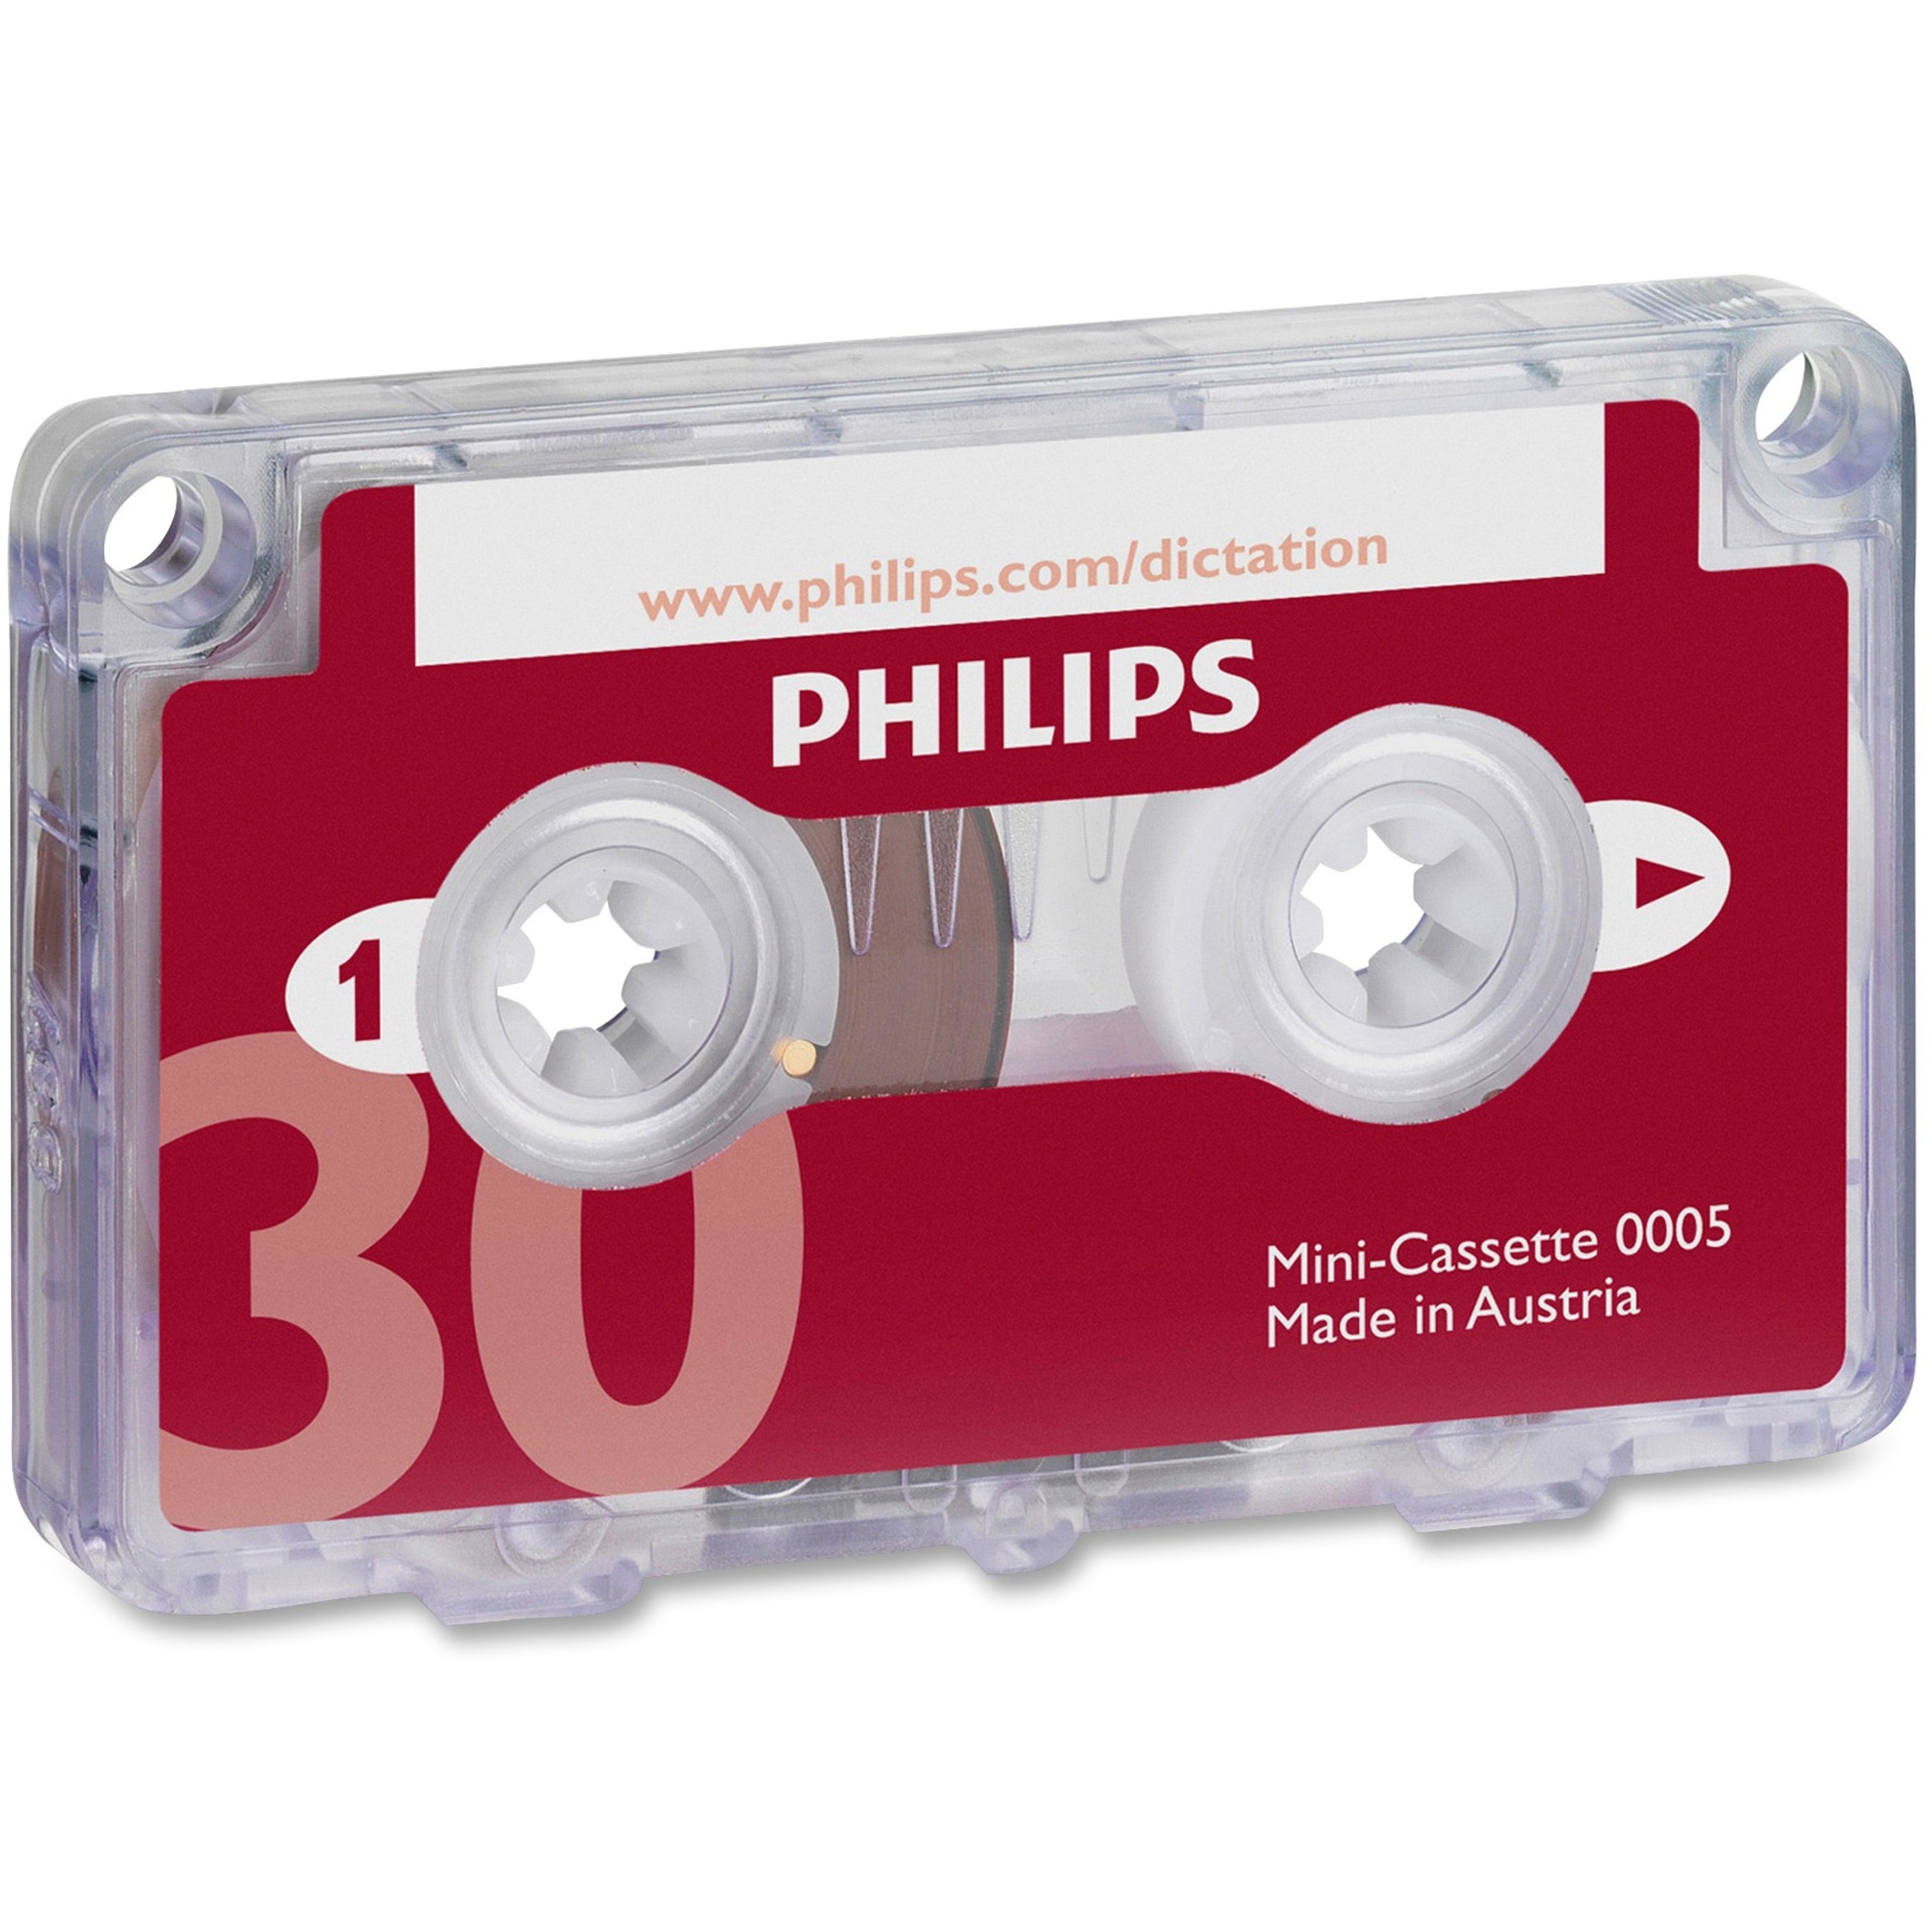 Philips, PSPLFH000560, Speech Mini Dictation Cassette, Red - image 1 of 2